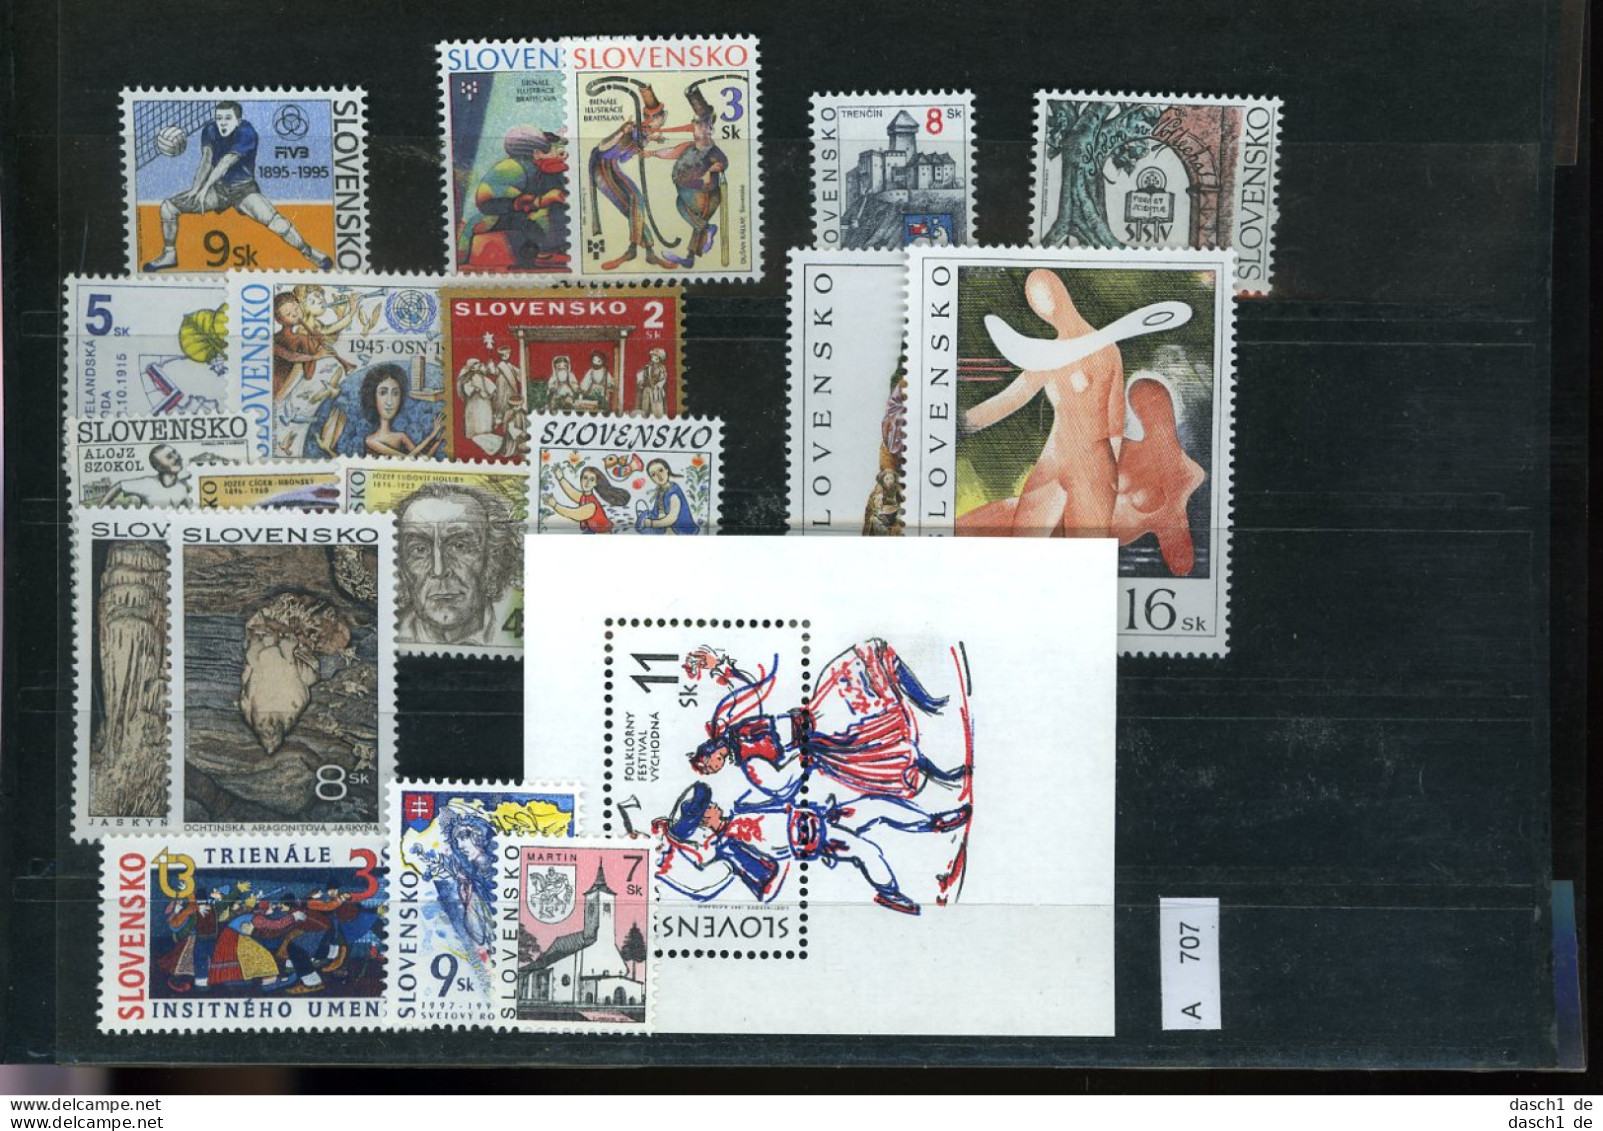 Sammlung Auf A5-Karte, Xx,x,o, 4 Lose U.a. Ex 1993, Slowakei - Collections, Lots & Series